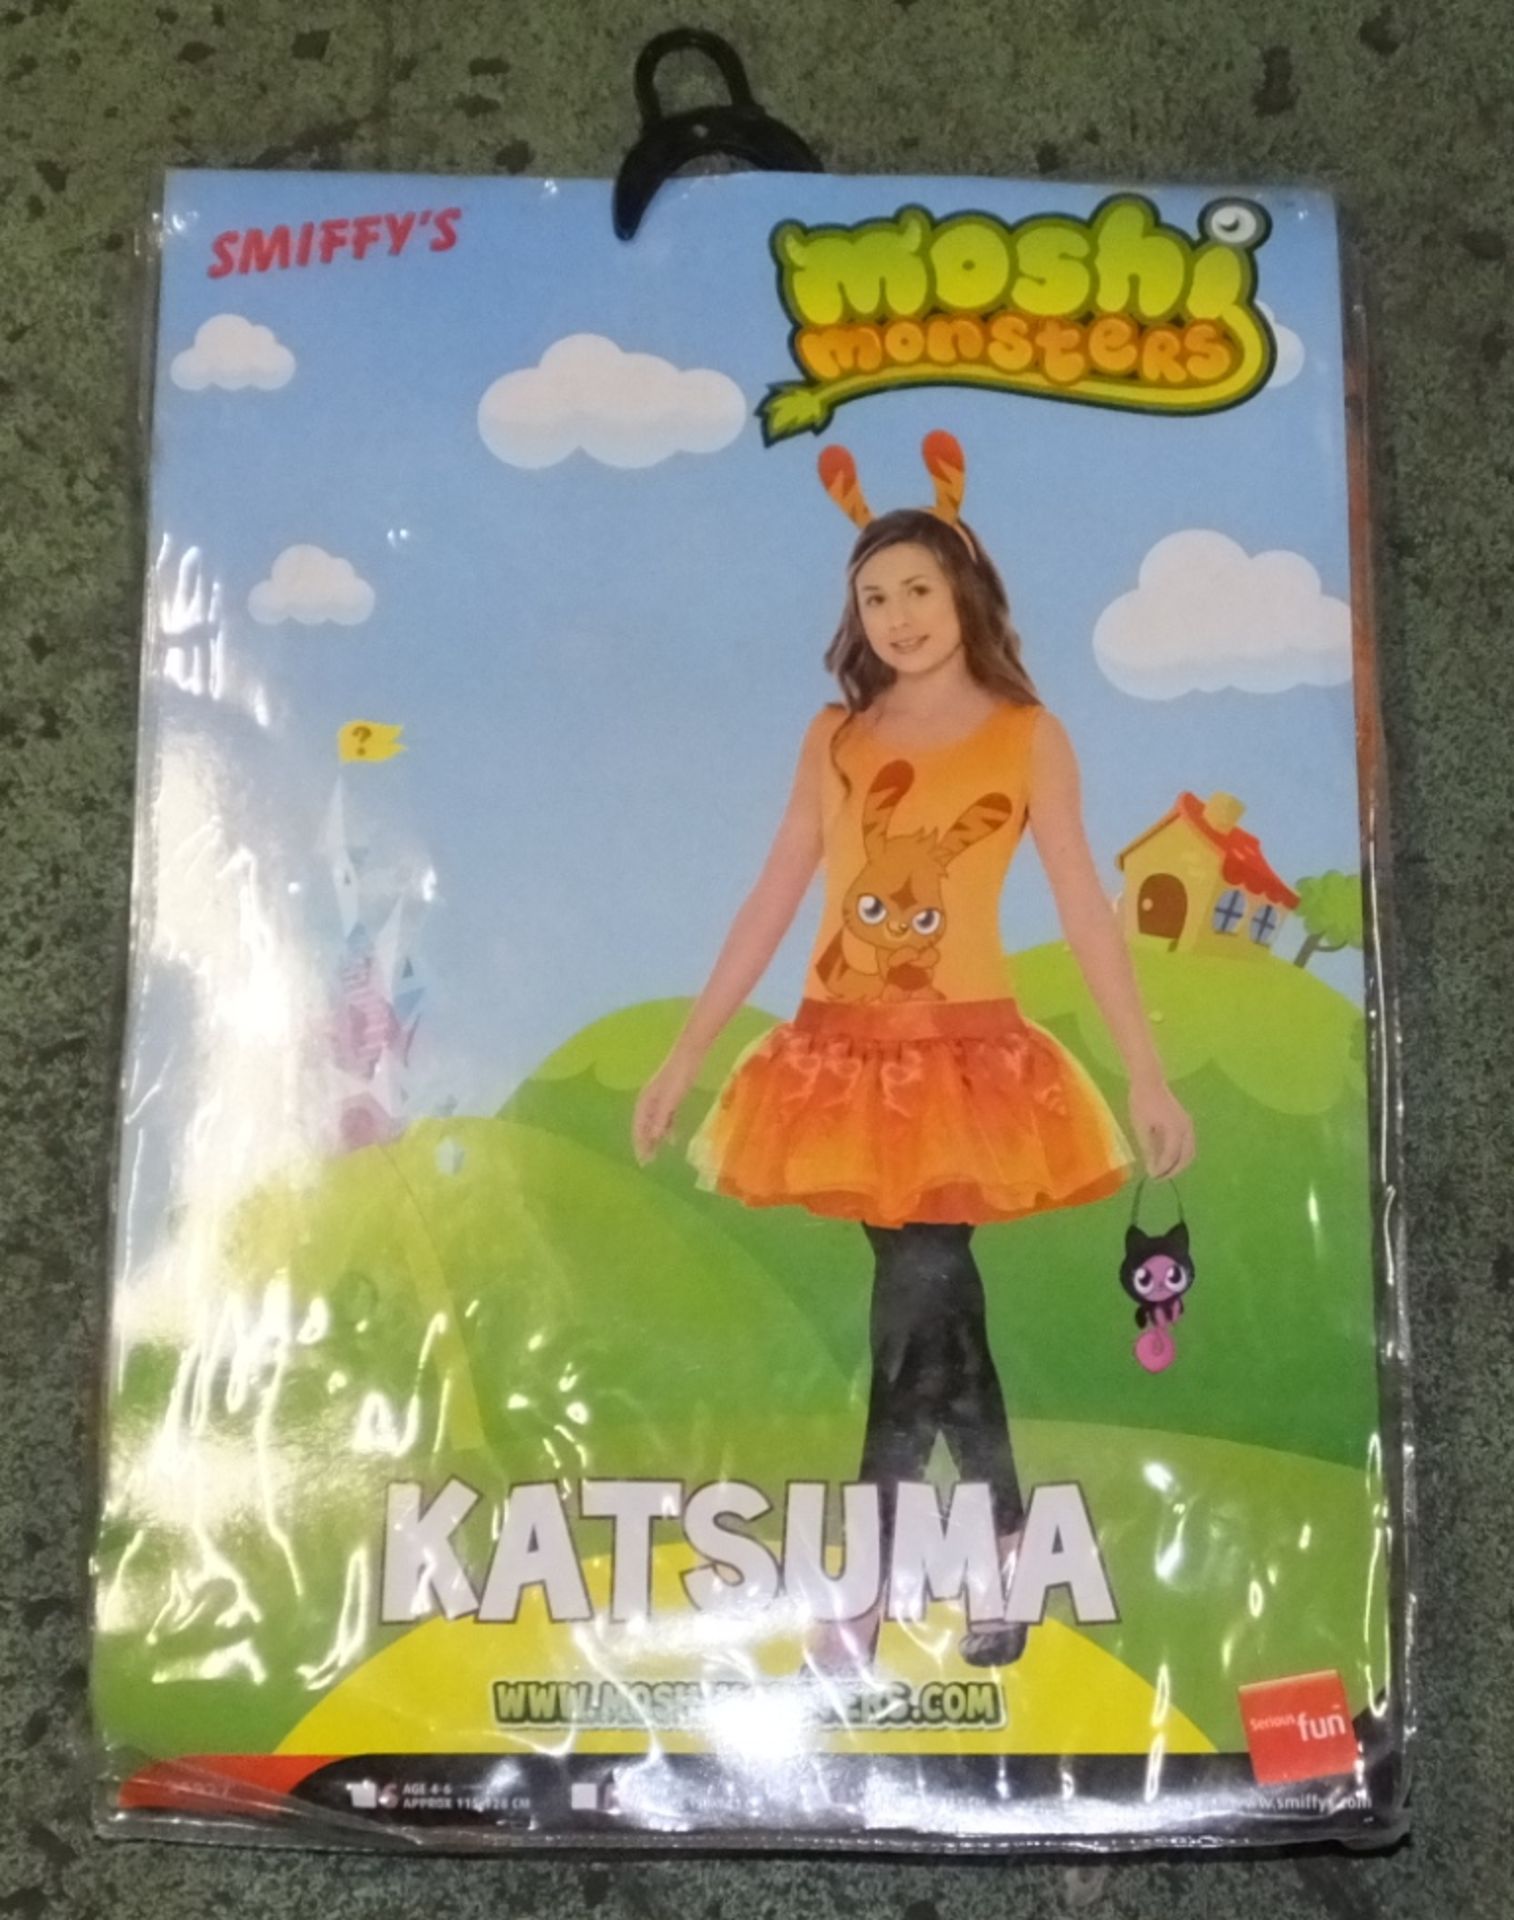 5x Smiffys Mooshi Monster Kids Costume - Katsuma - Image 2 of 2